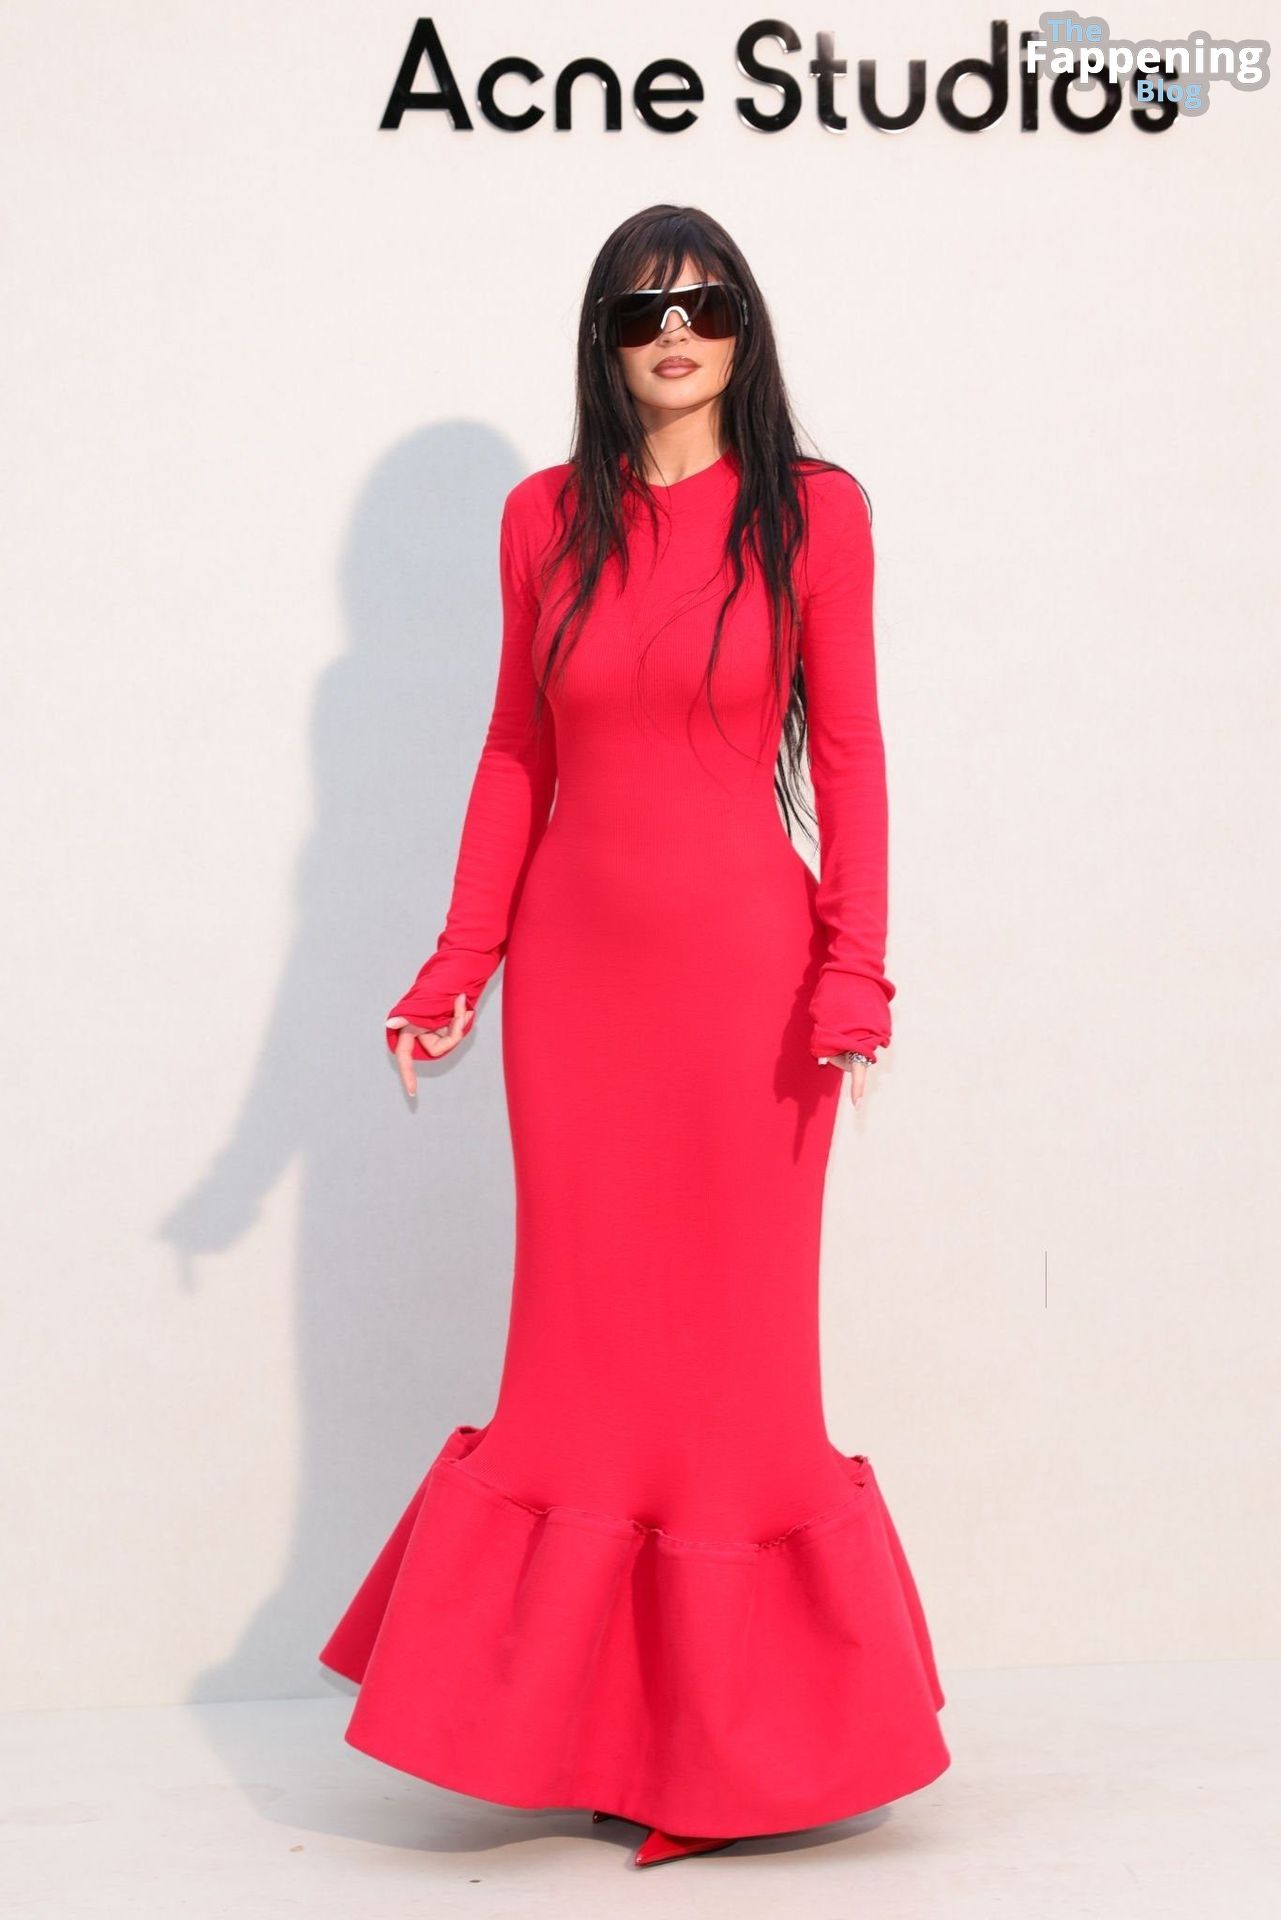 Kylie-Jenner-Sensational-Curves-Boobs-Paris-Fashion-Week-4-thefappeningblog.com_.jpg